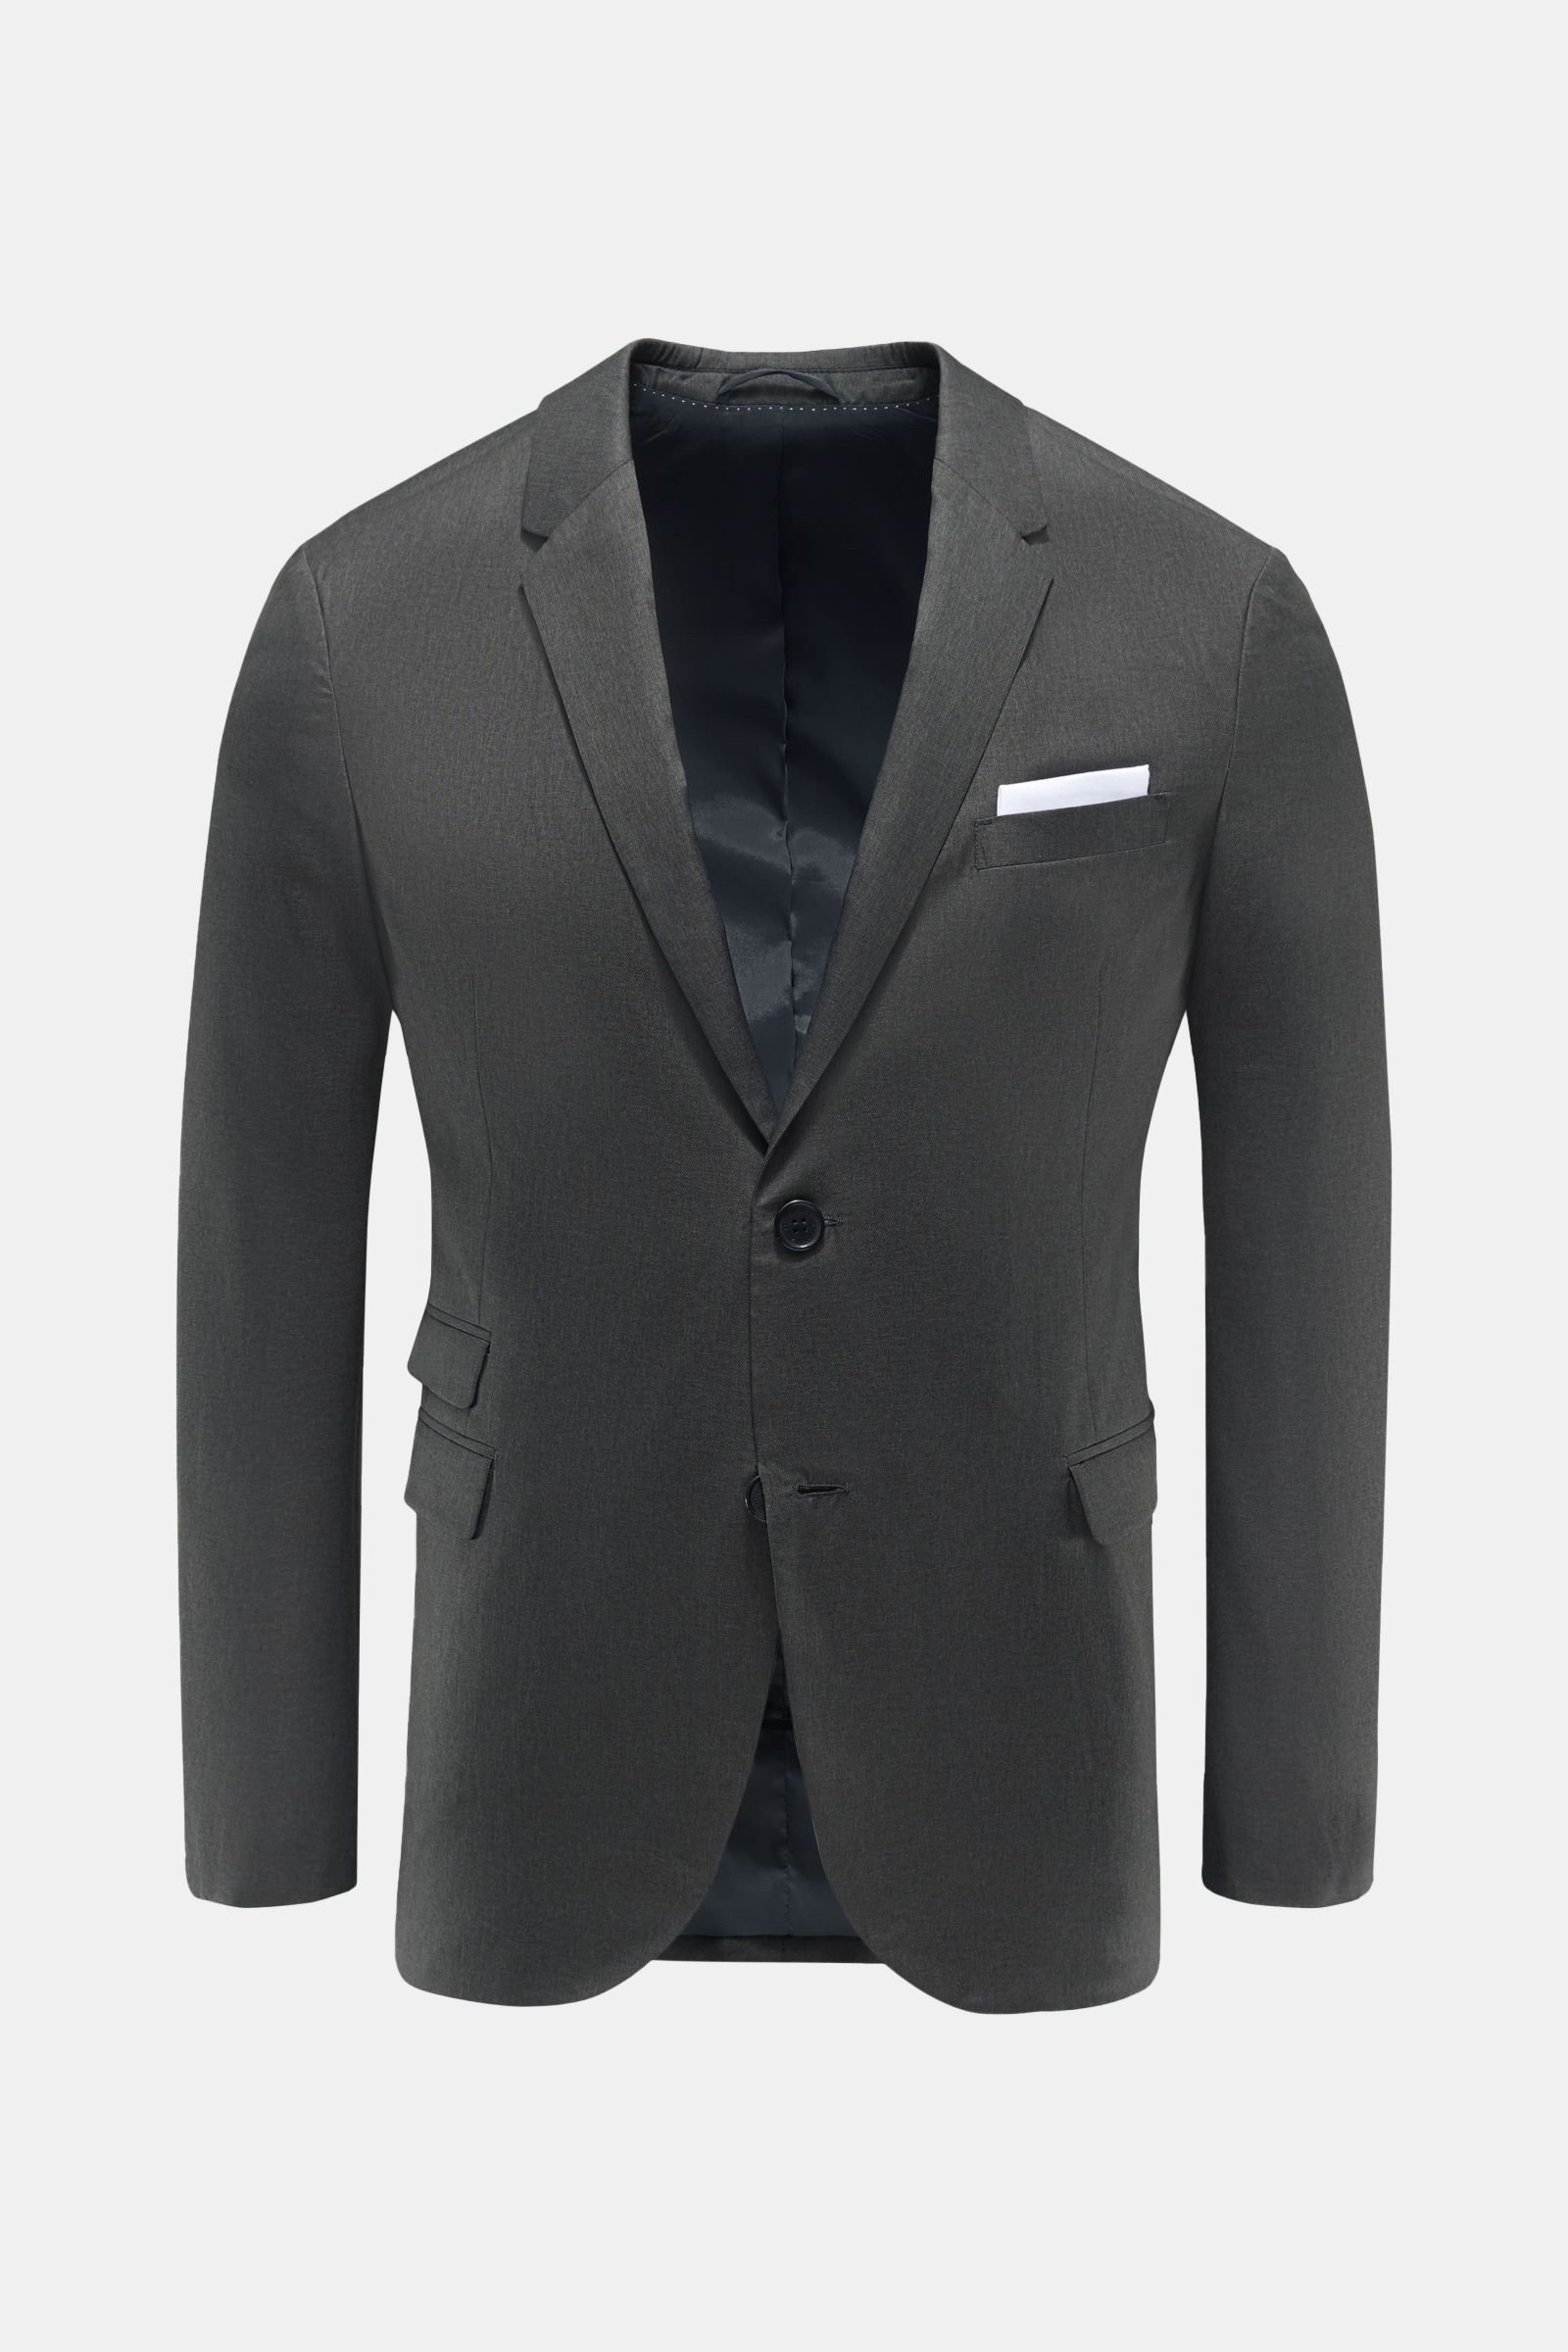 Smart-casual jacket grey/brown